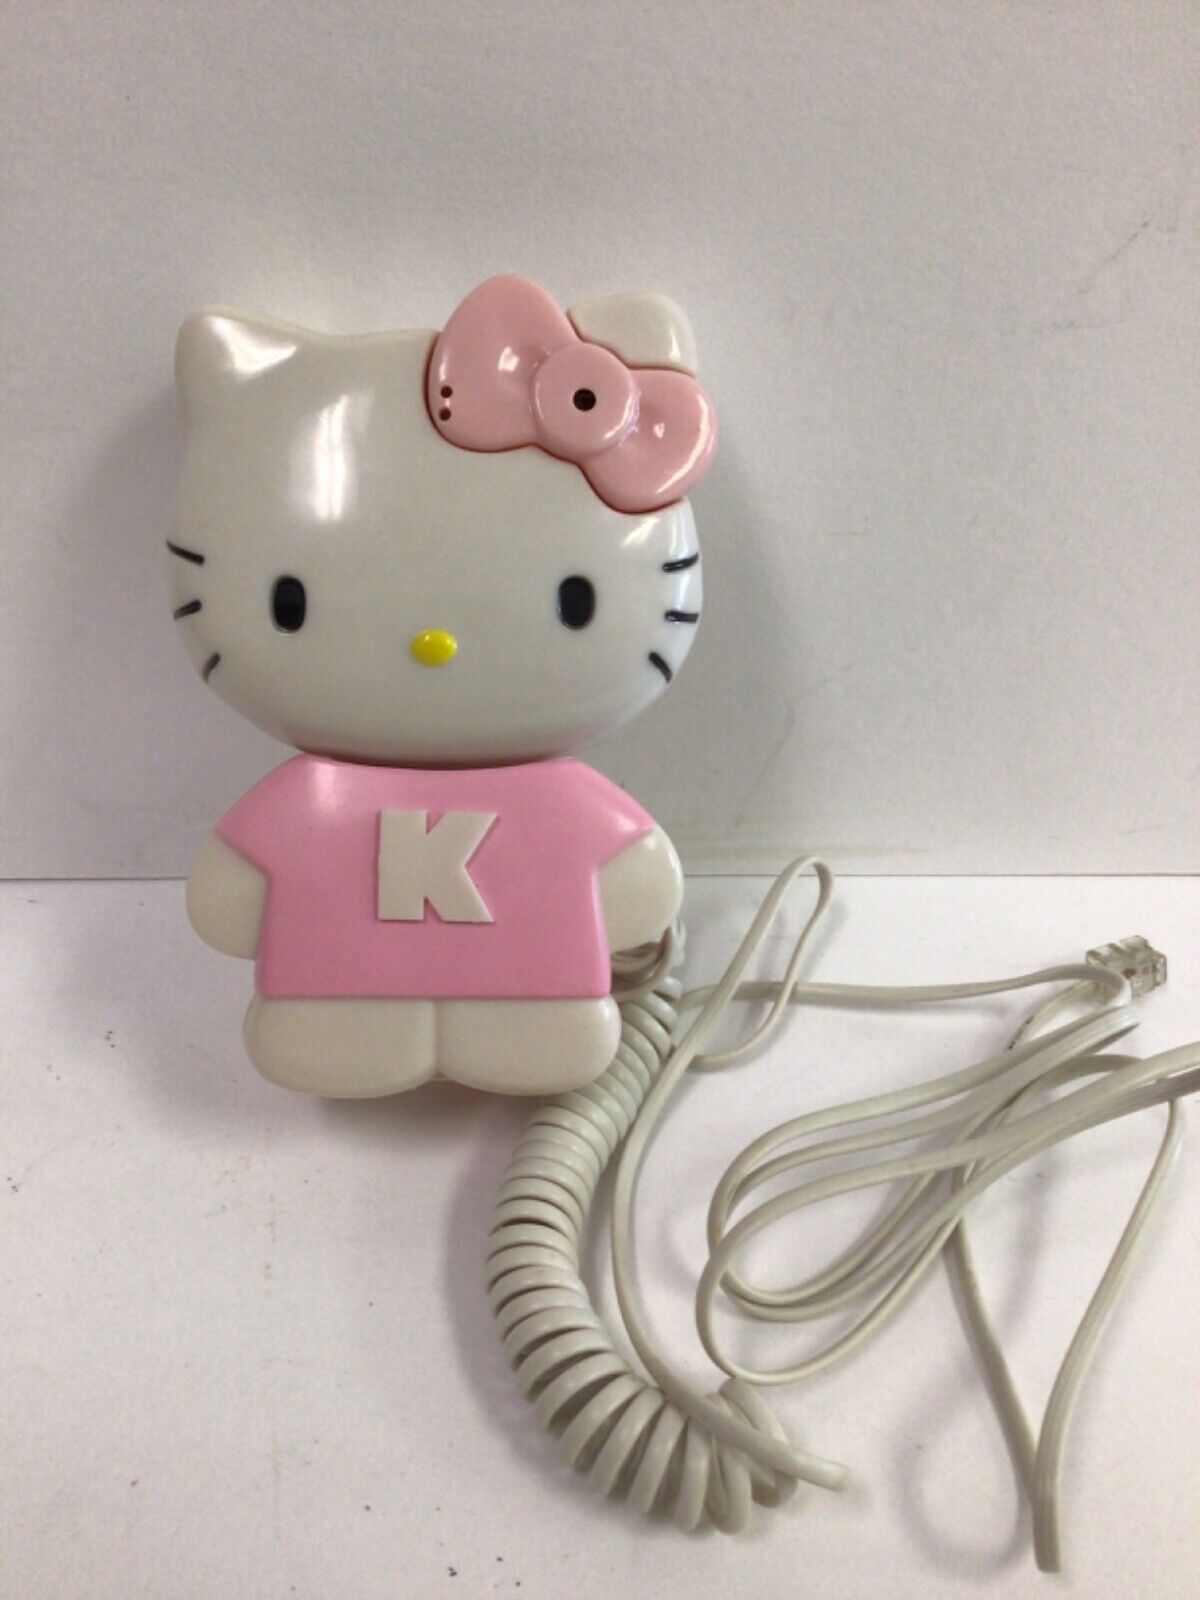 VTG Sanrio Hello Kitty Landline Telephone Tested and Working “Rare”